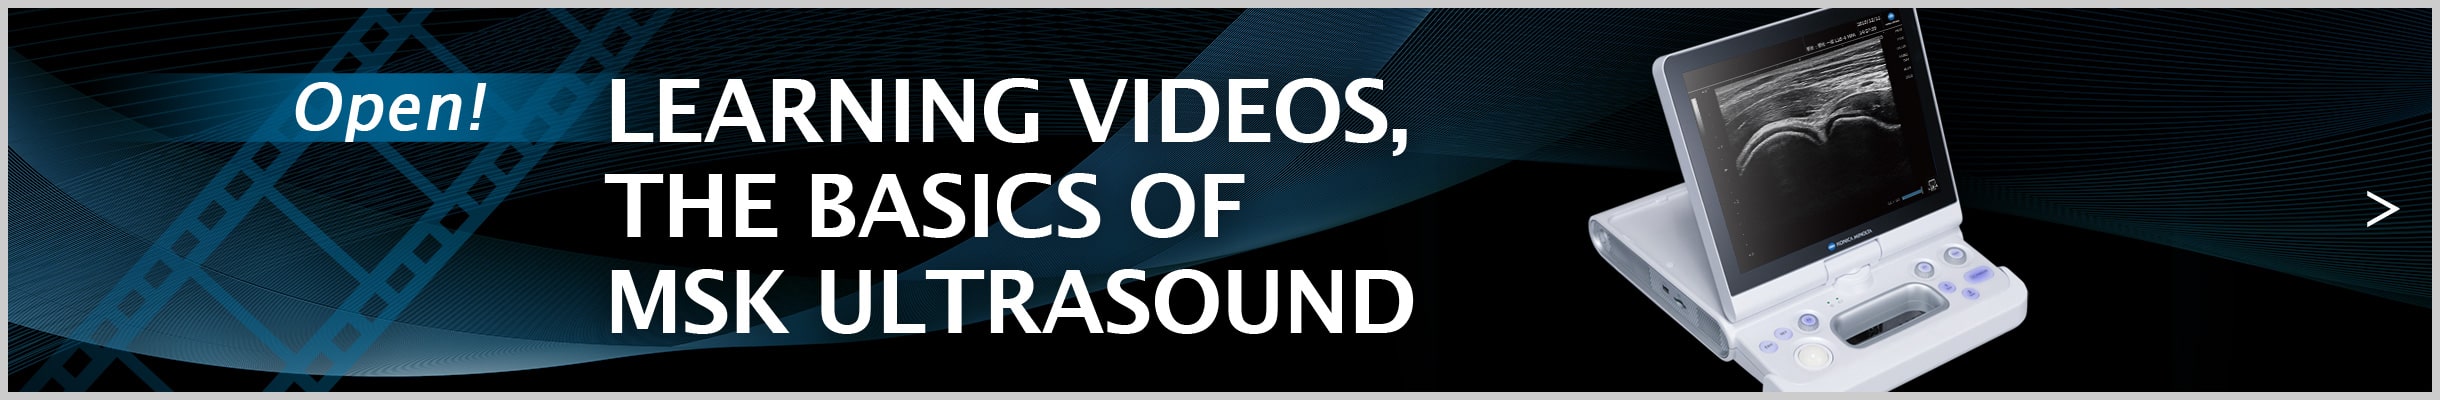 -OPEN!- LEARNING VIDEOS, THE BASICS OF MSK ULTRASOUND